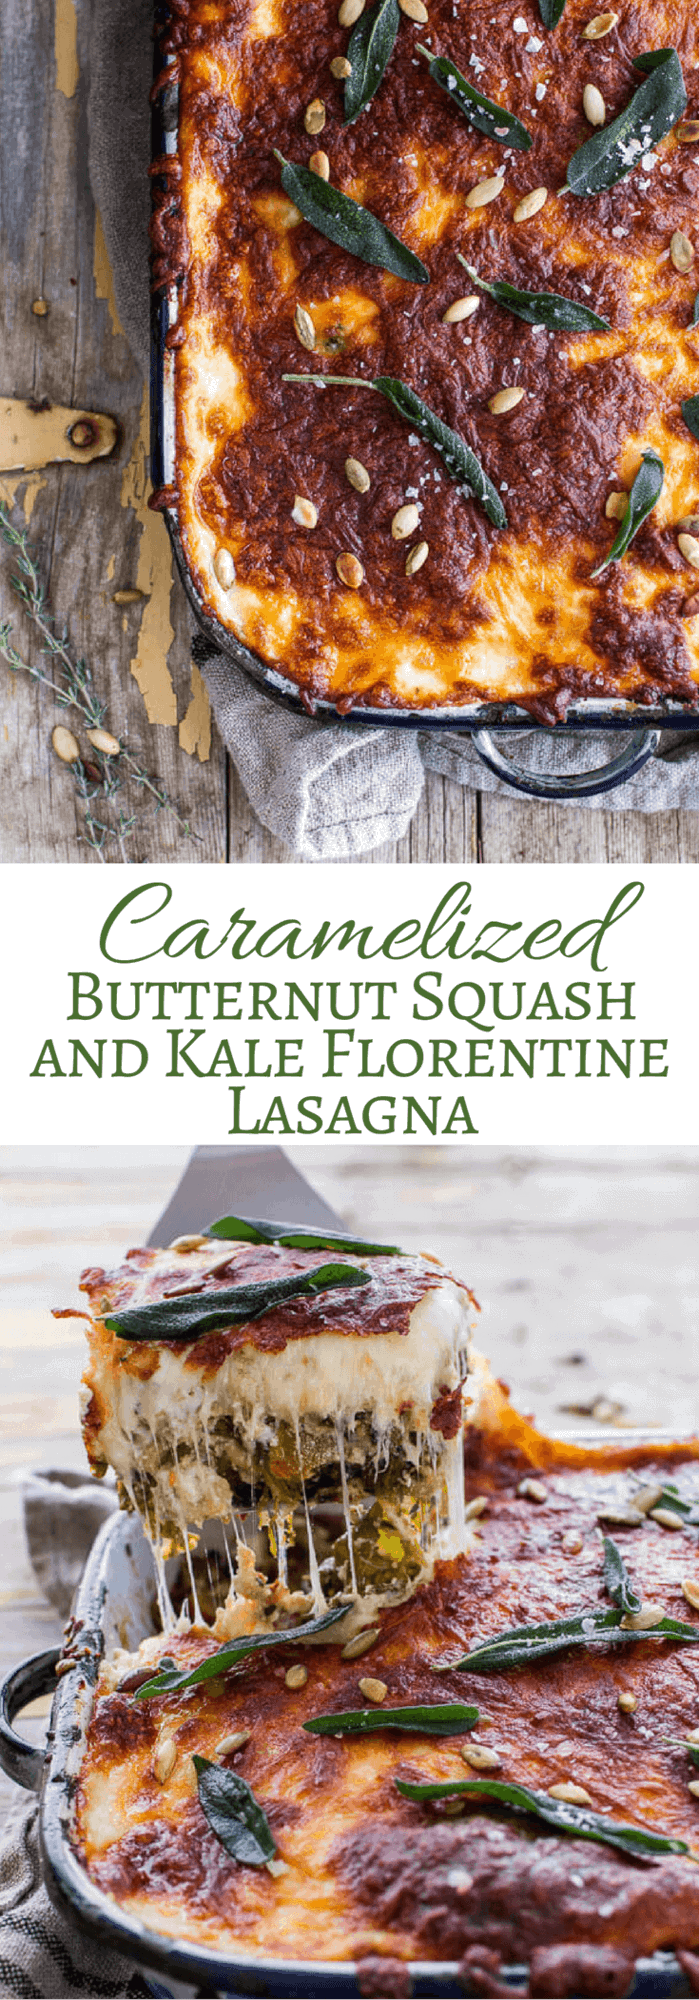 Caramelized Butternut Squash and Kale Florentine Lasagna | halfbakedharvest.com @hbharvest